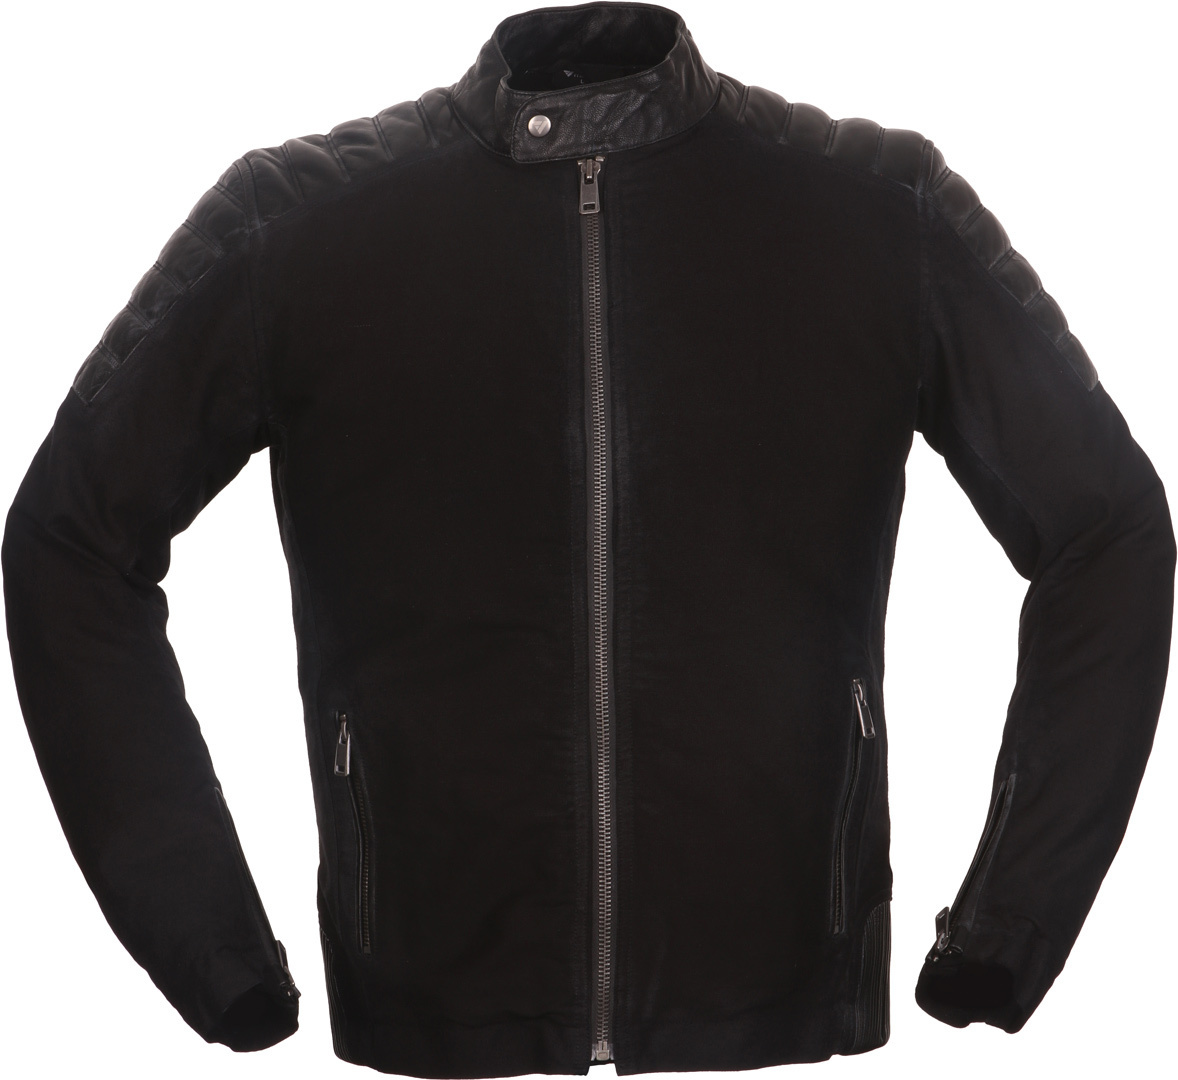 Modeka Dyke Motorrad Textiljacke, schwarz, Größe 2XL, schwarz, Größe 2XL